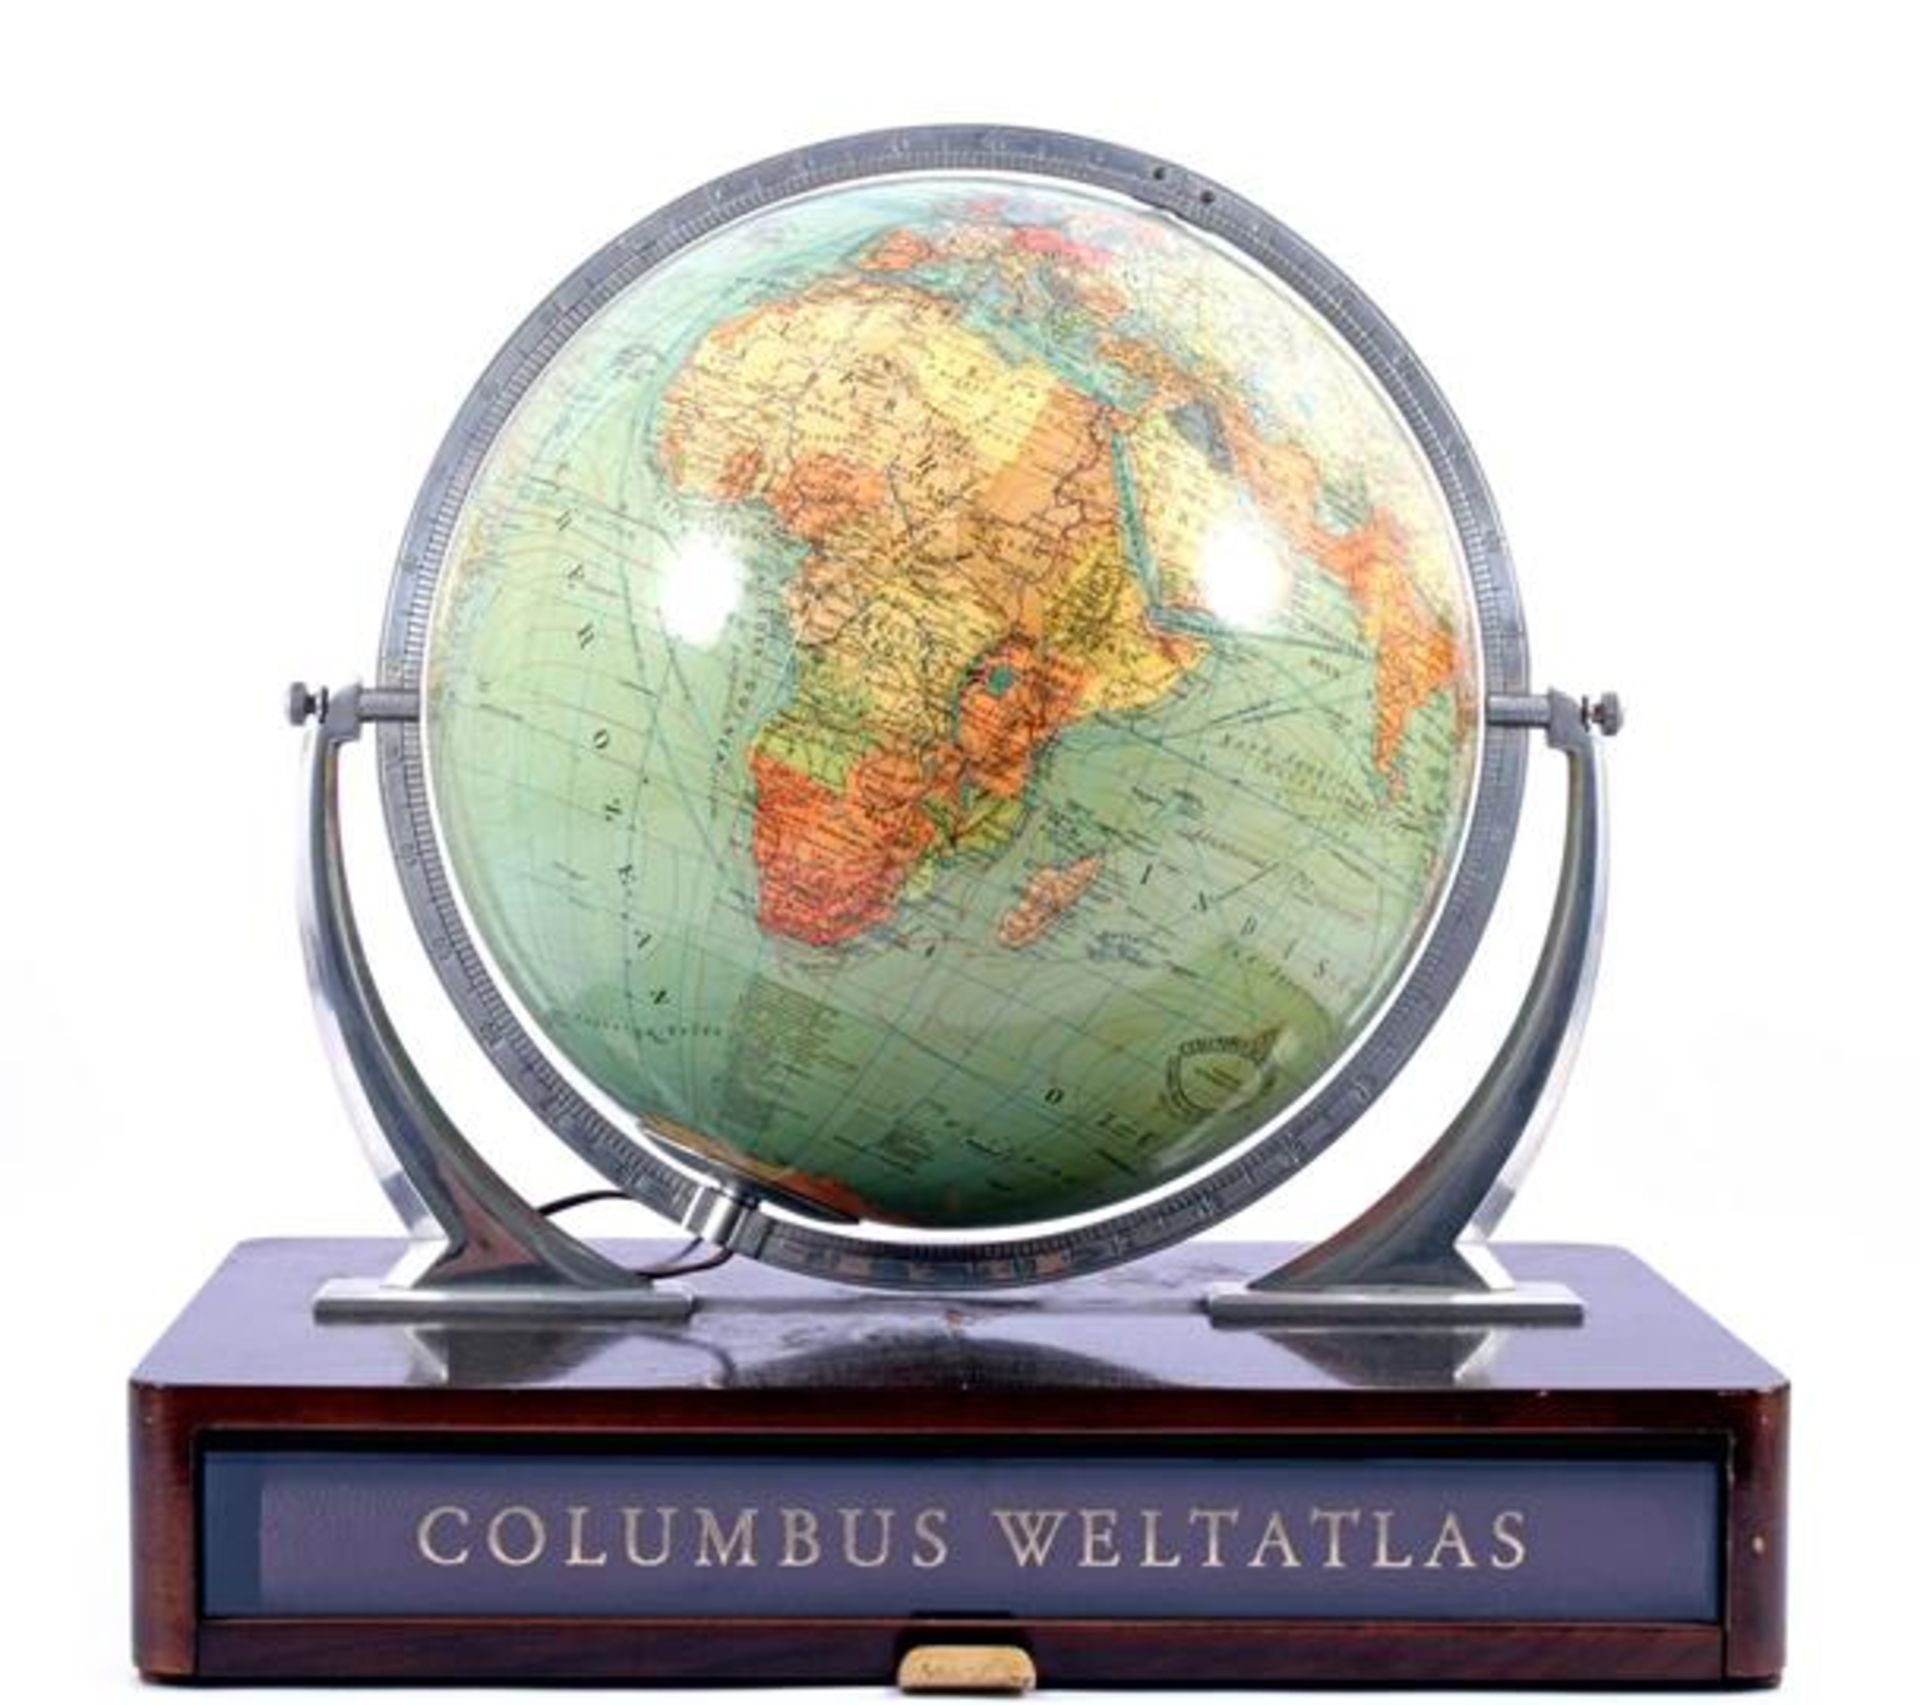 Table globe with Columbus Weltatlas E Debes Handatlas Dr. Karlheinz Wagner Jubilaumsausgabe Berlin